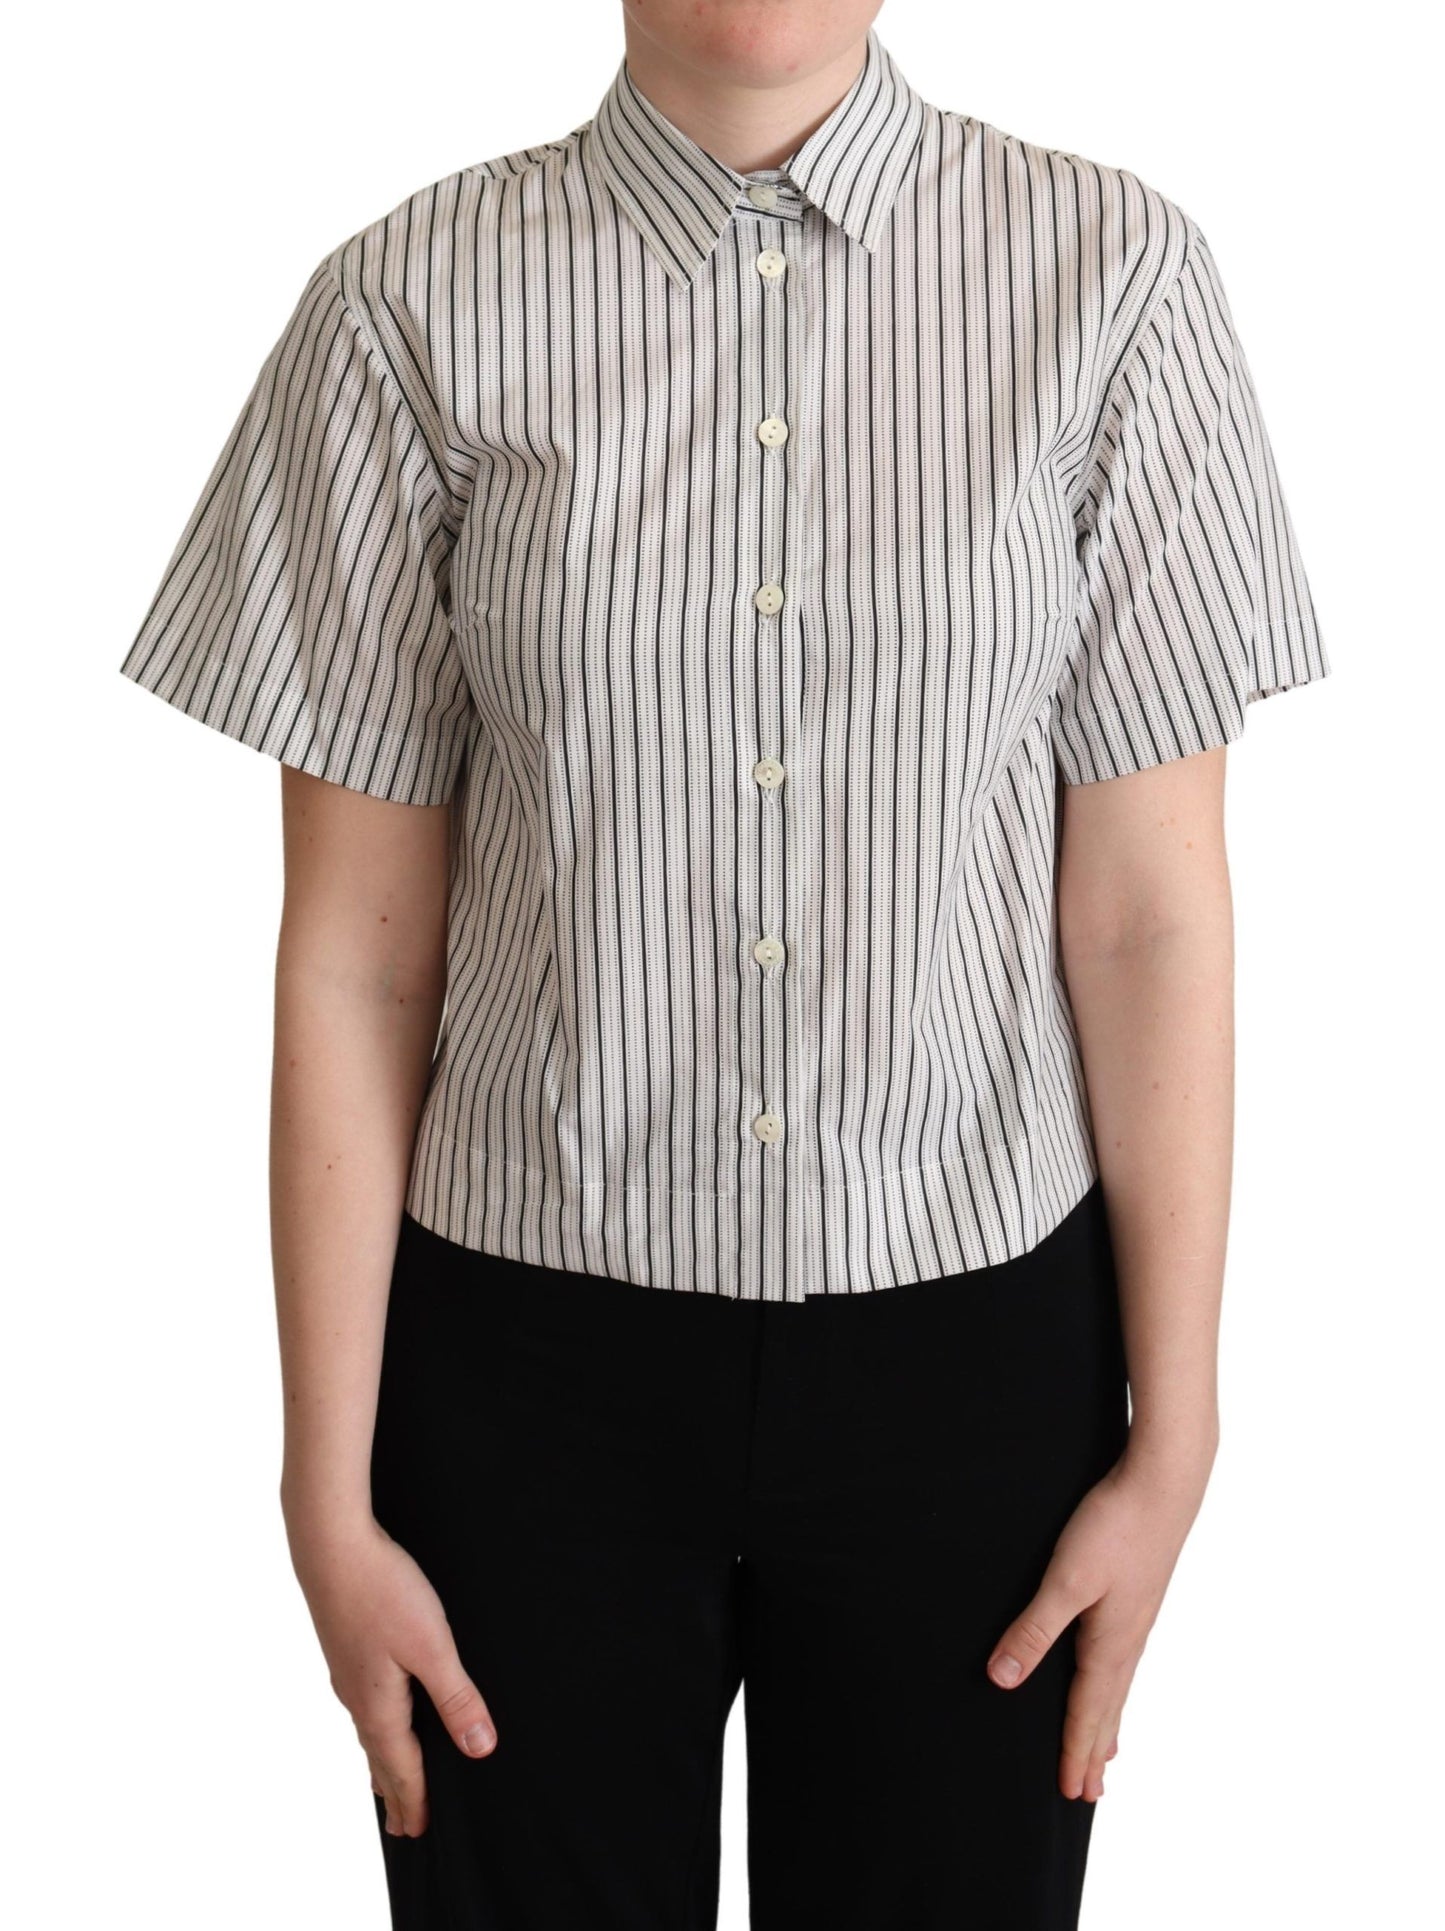 Chic Monochrome Striped Polo Shirt